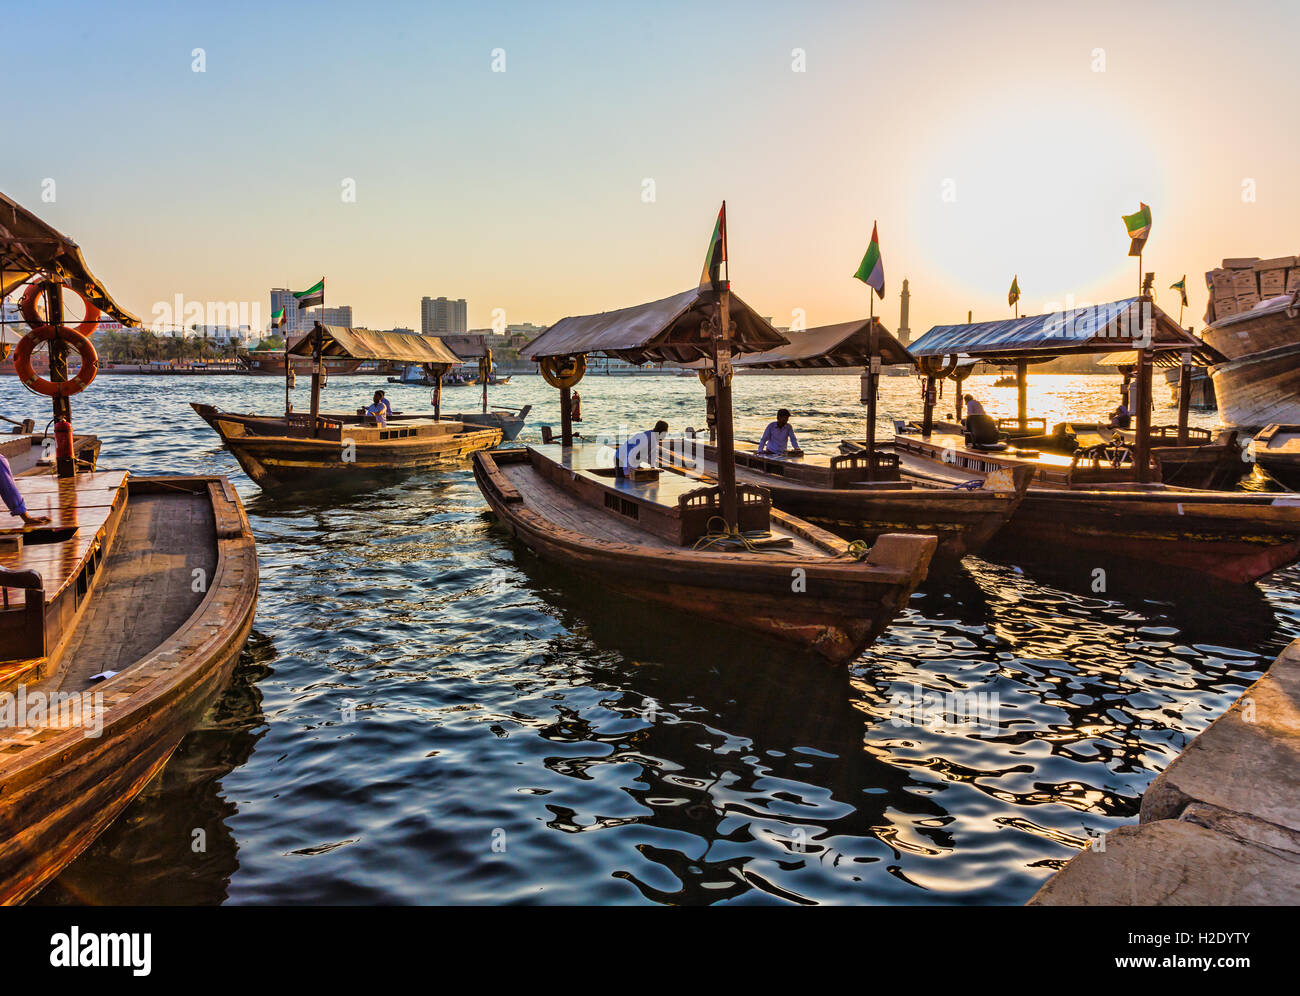 Boats on the Bay Creek in Dubai, UAE Stock Photo